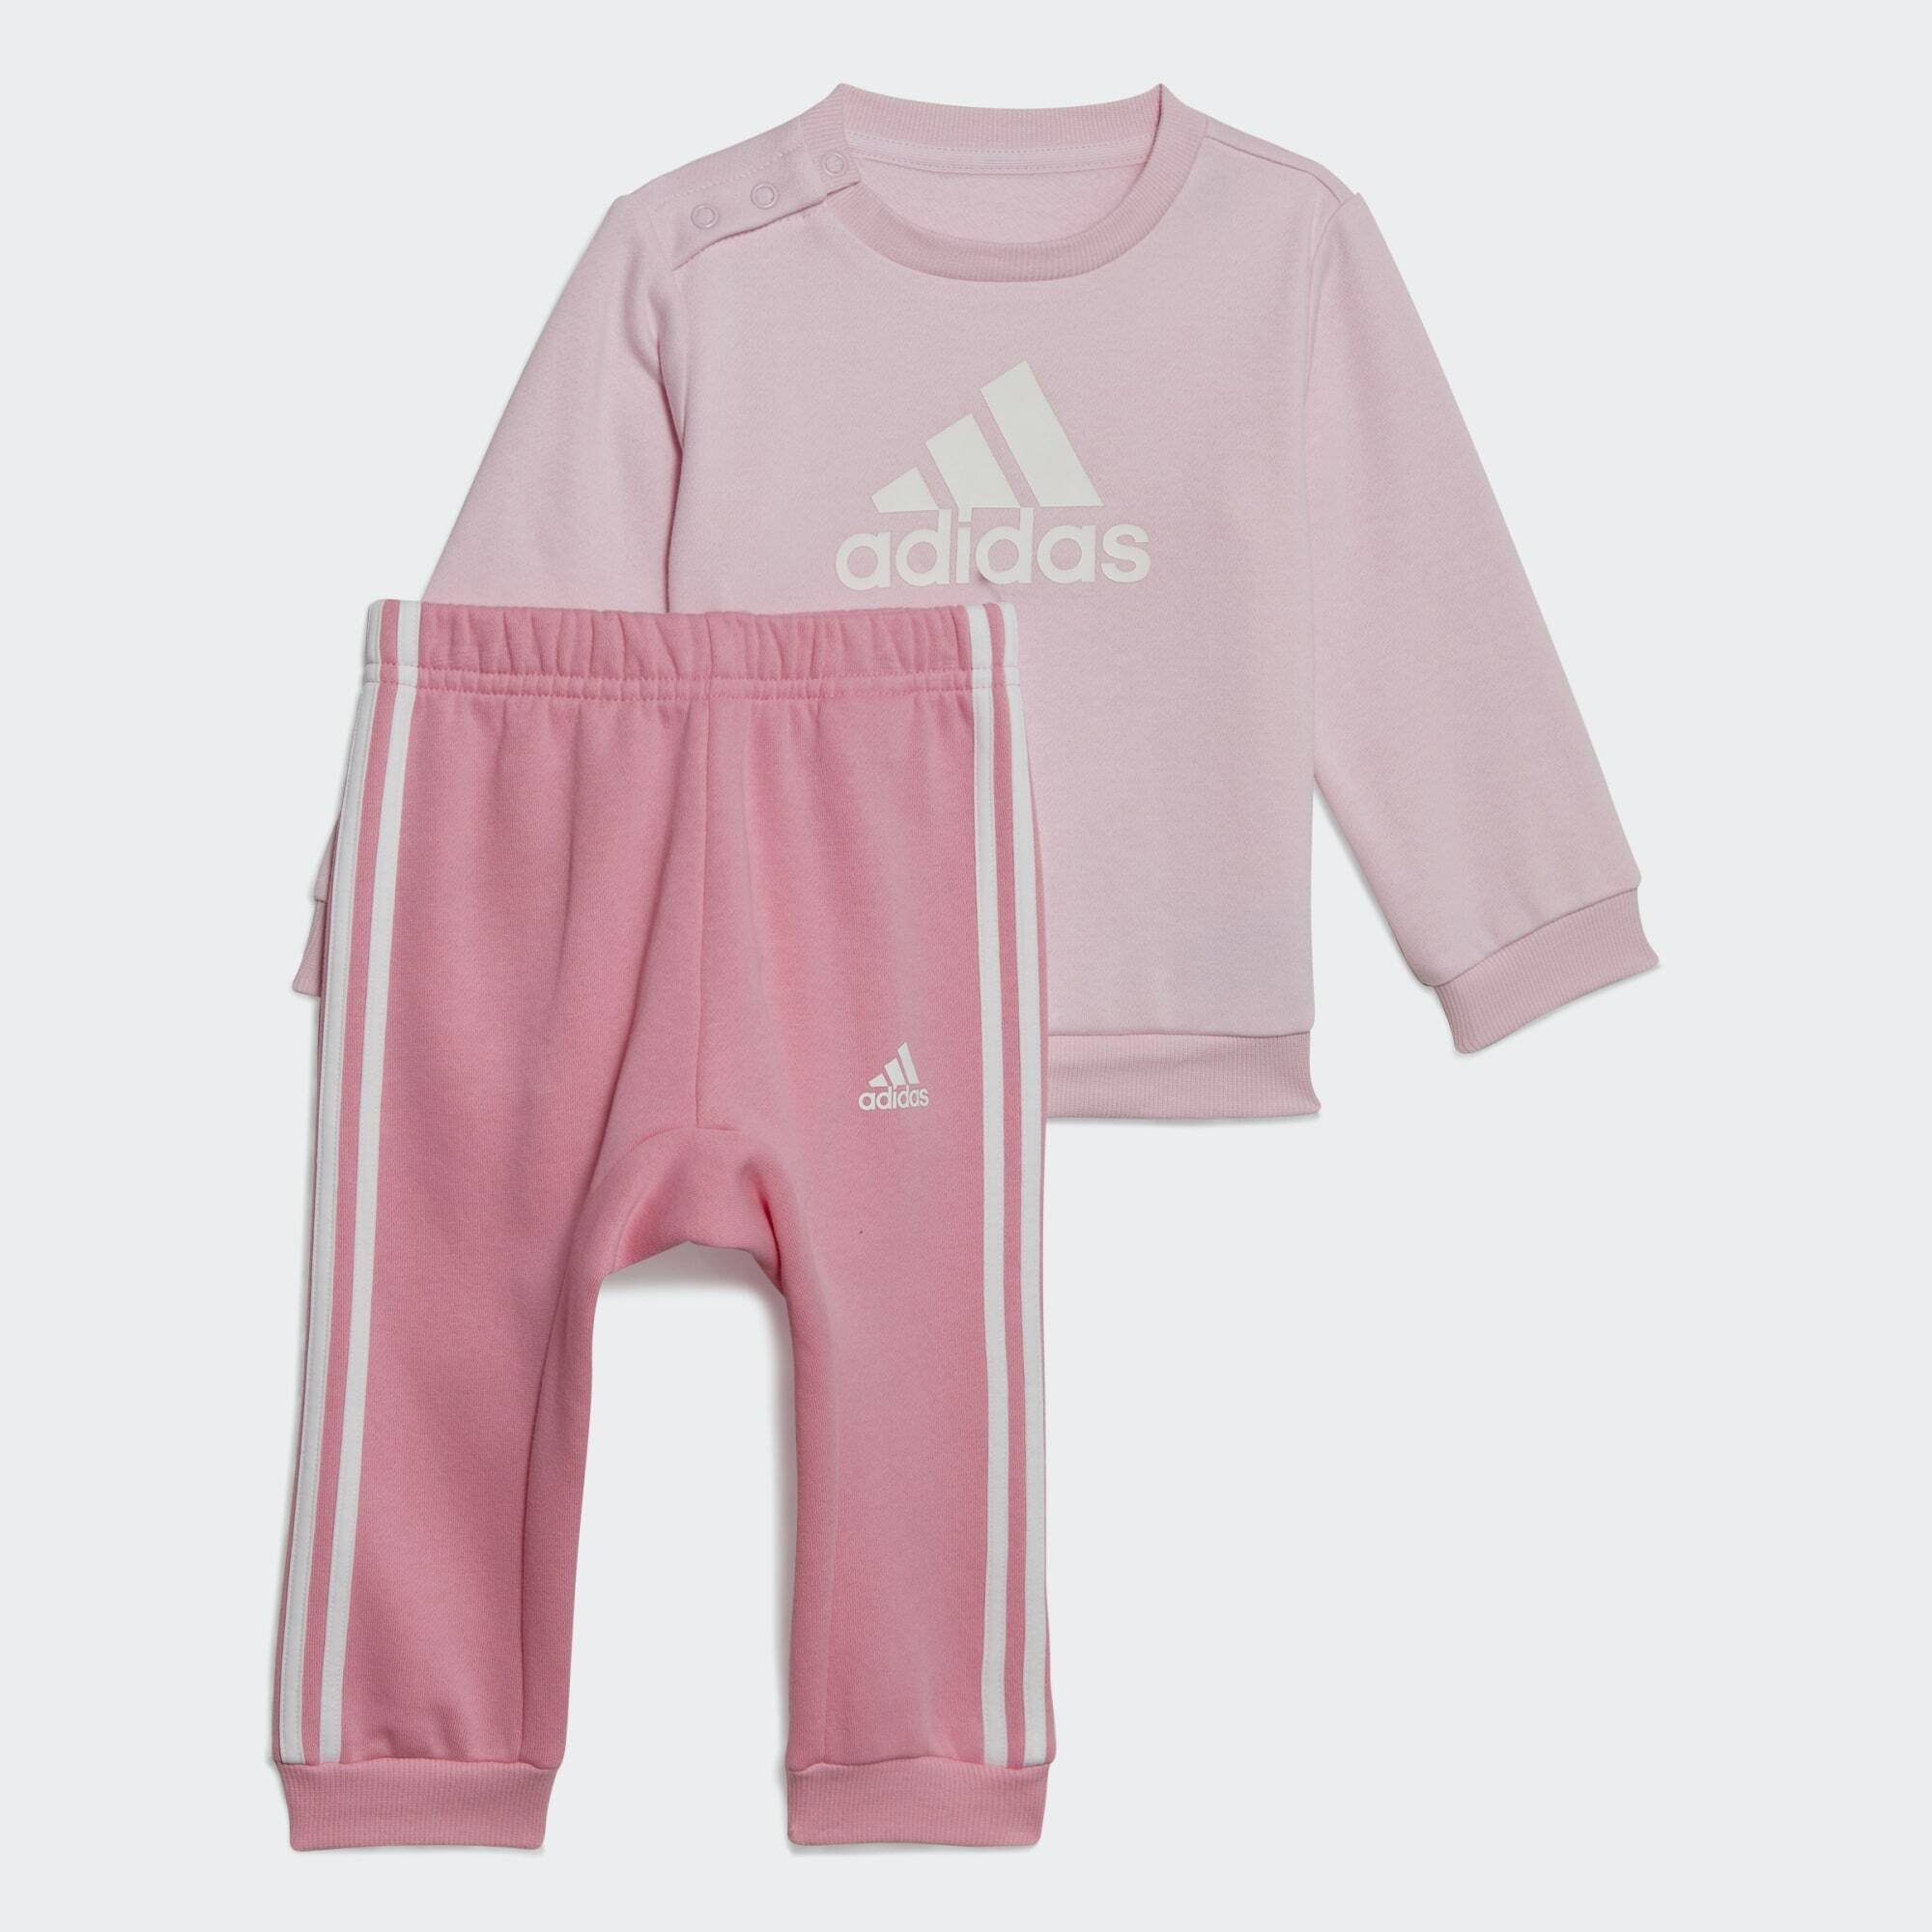 OF adidas Pink Sportswear Clear BADGE SPORT White / Trainingsanzug JOGGINGANZUG